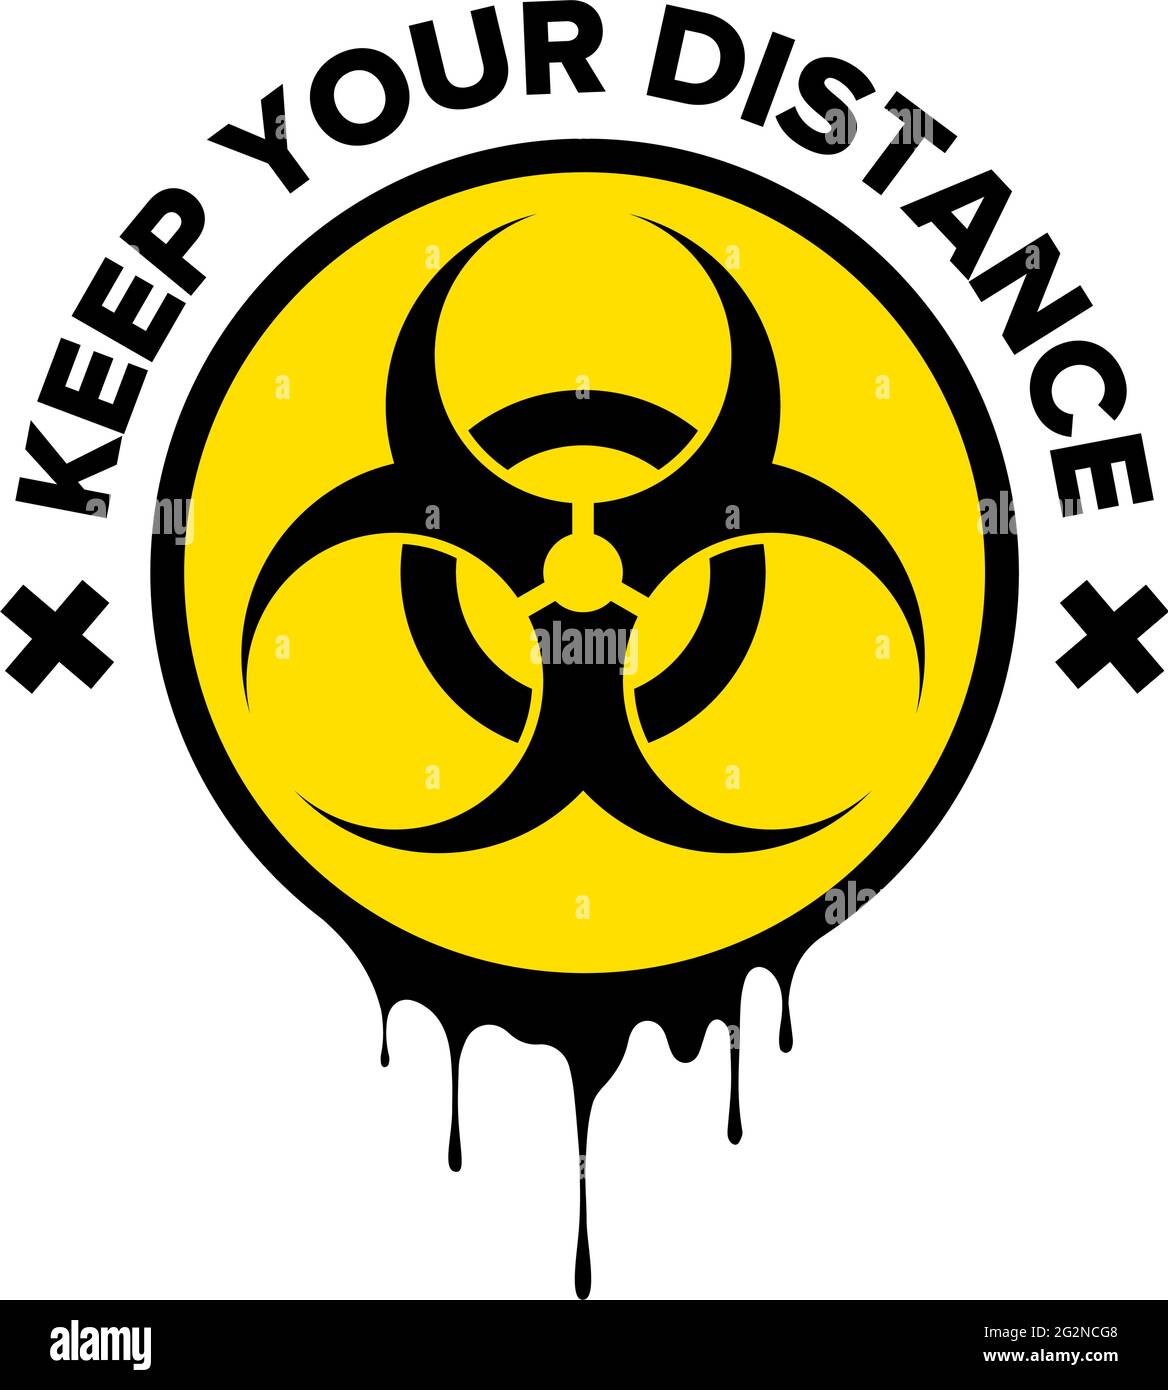 Dripping biohazard symbol. Keep your distance print. Biological hazard warning sign. Stock Vector